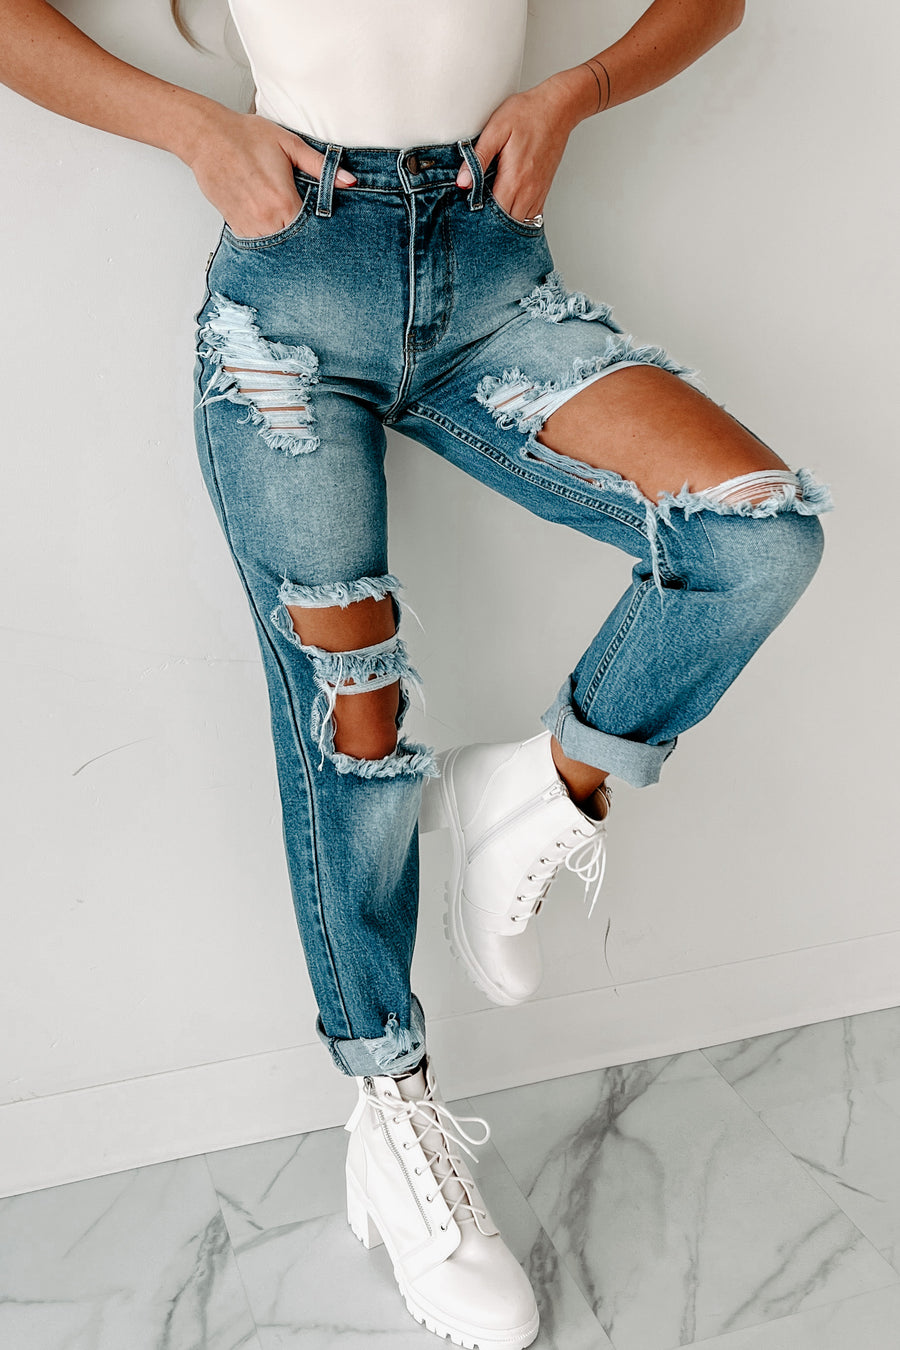 Making Comparisons High Rise Distressed Mom Jeans (Medium) - NanaMacs